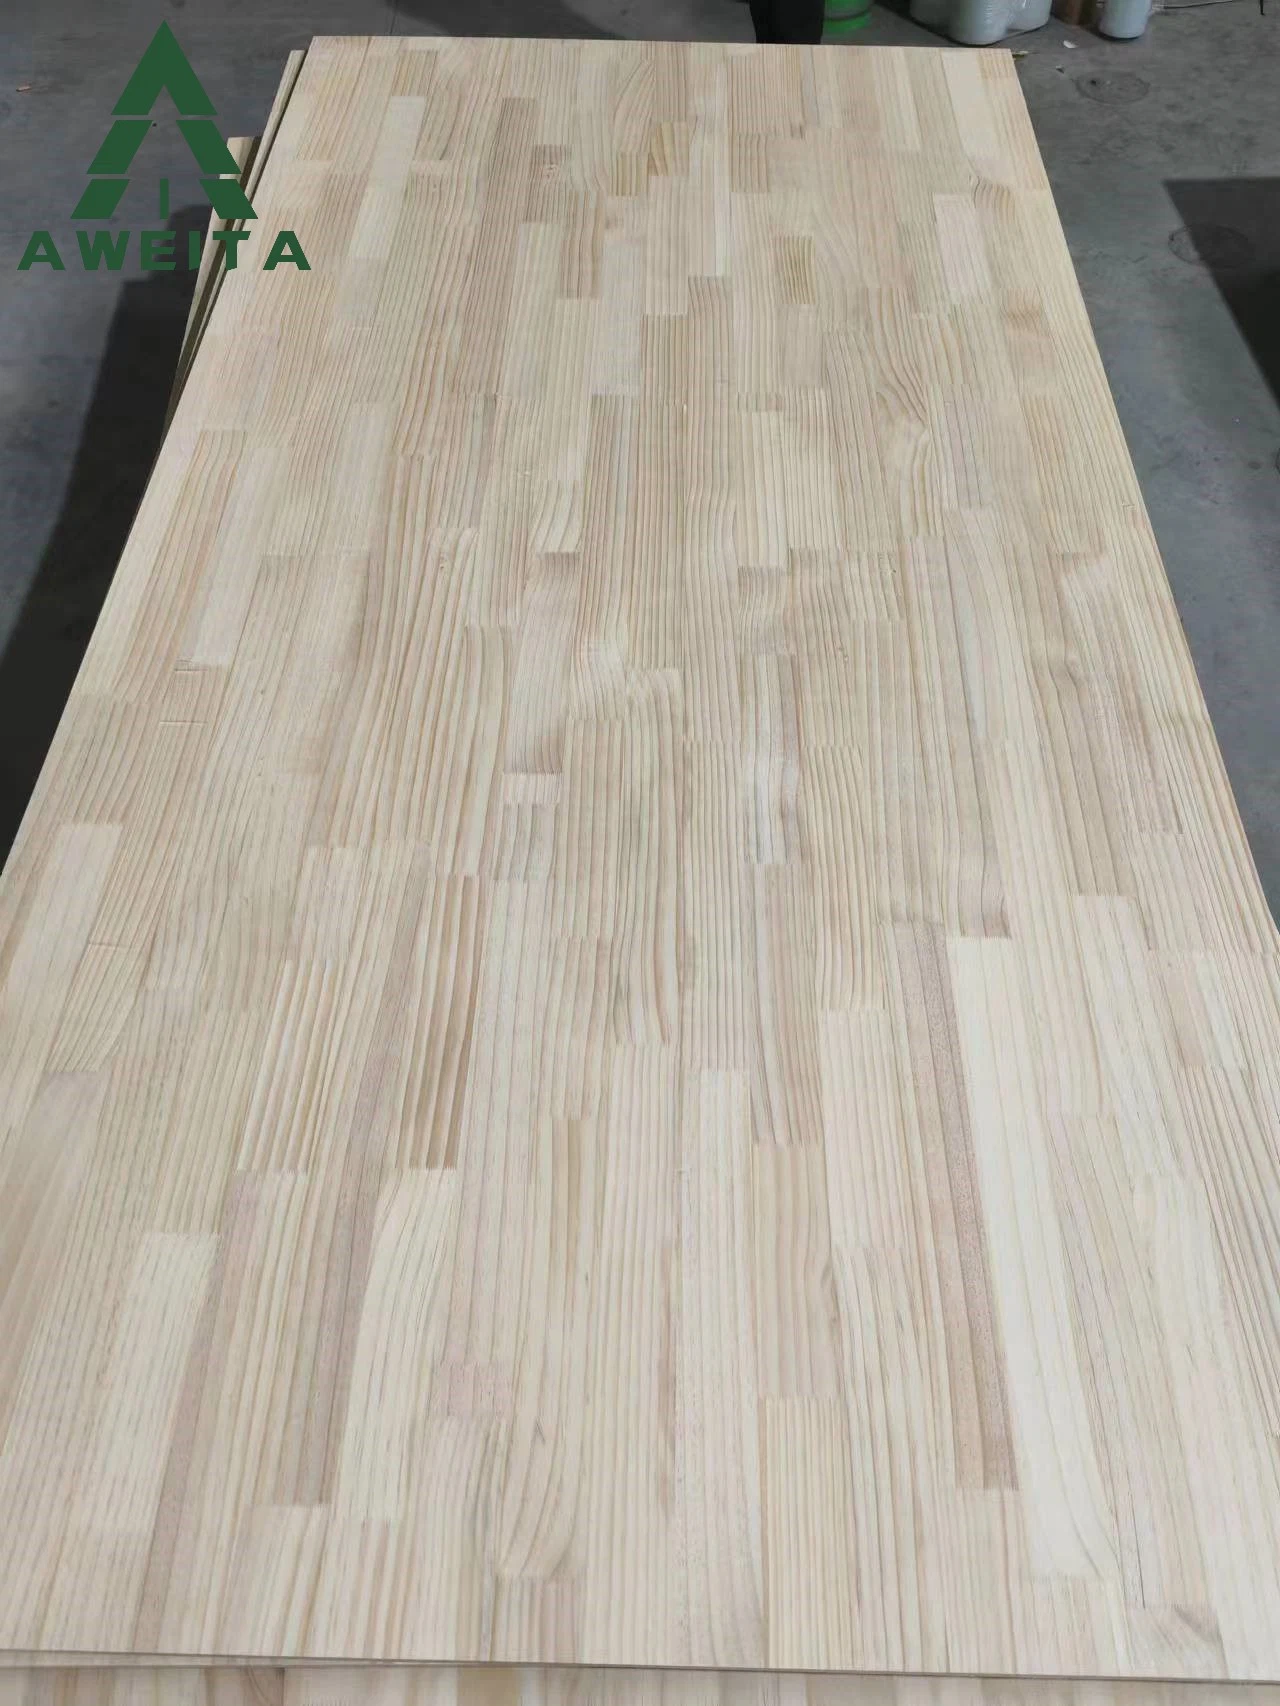 Radiata Kiefer Kante Geklebte Panel Factory Aus China Aweita Holz